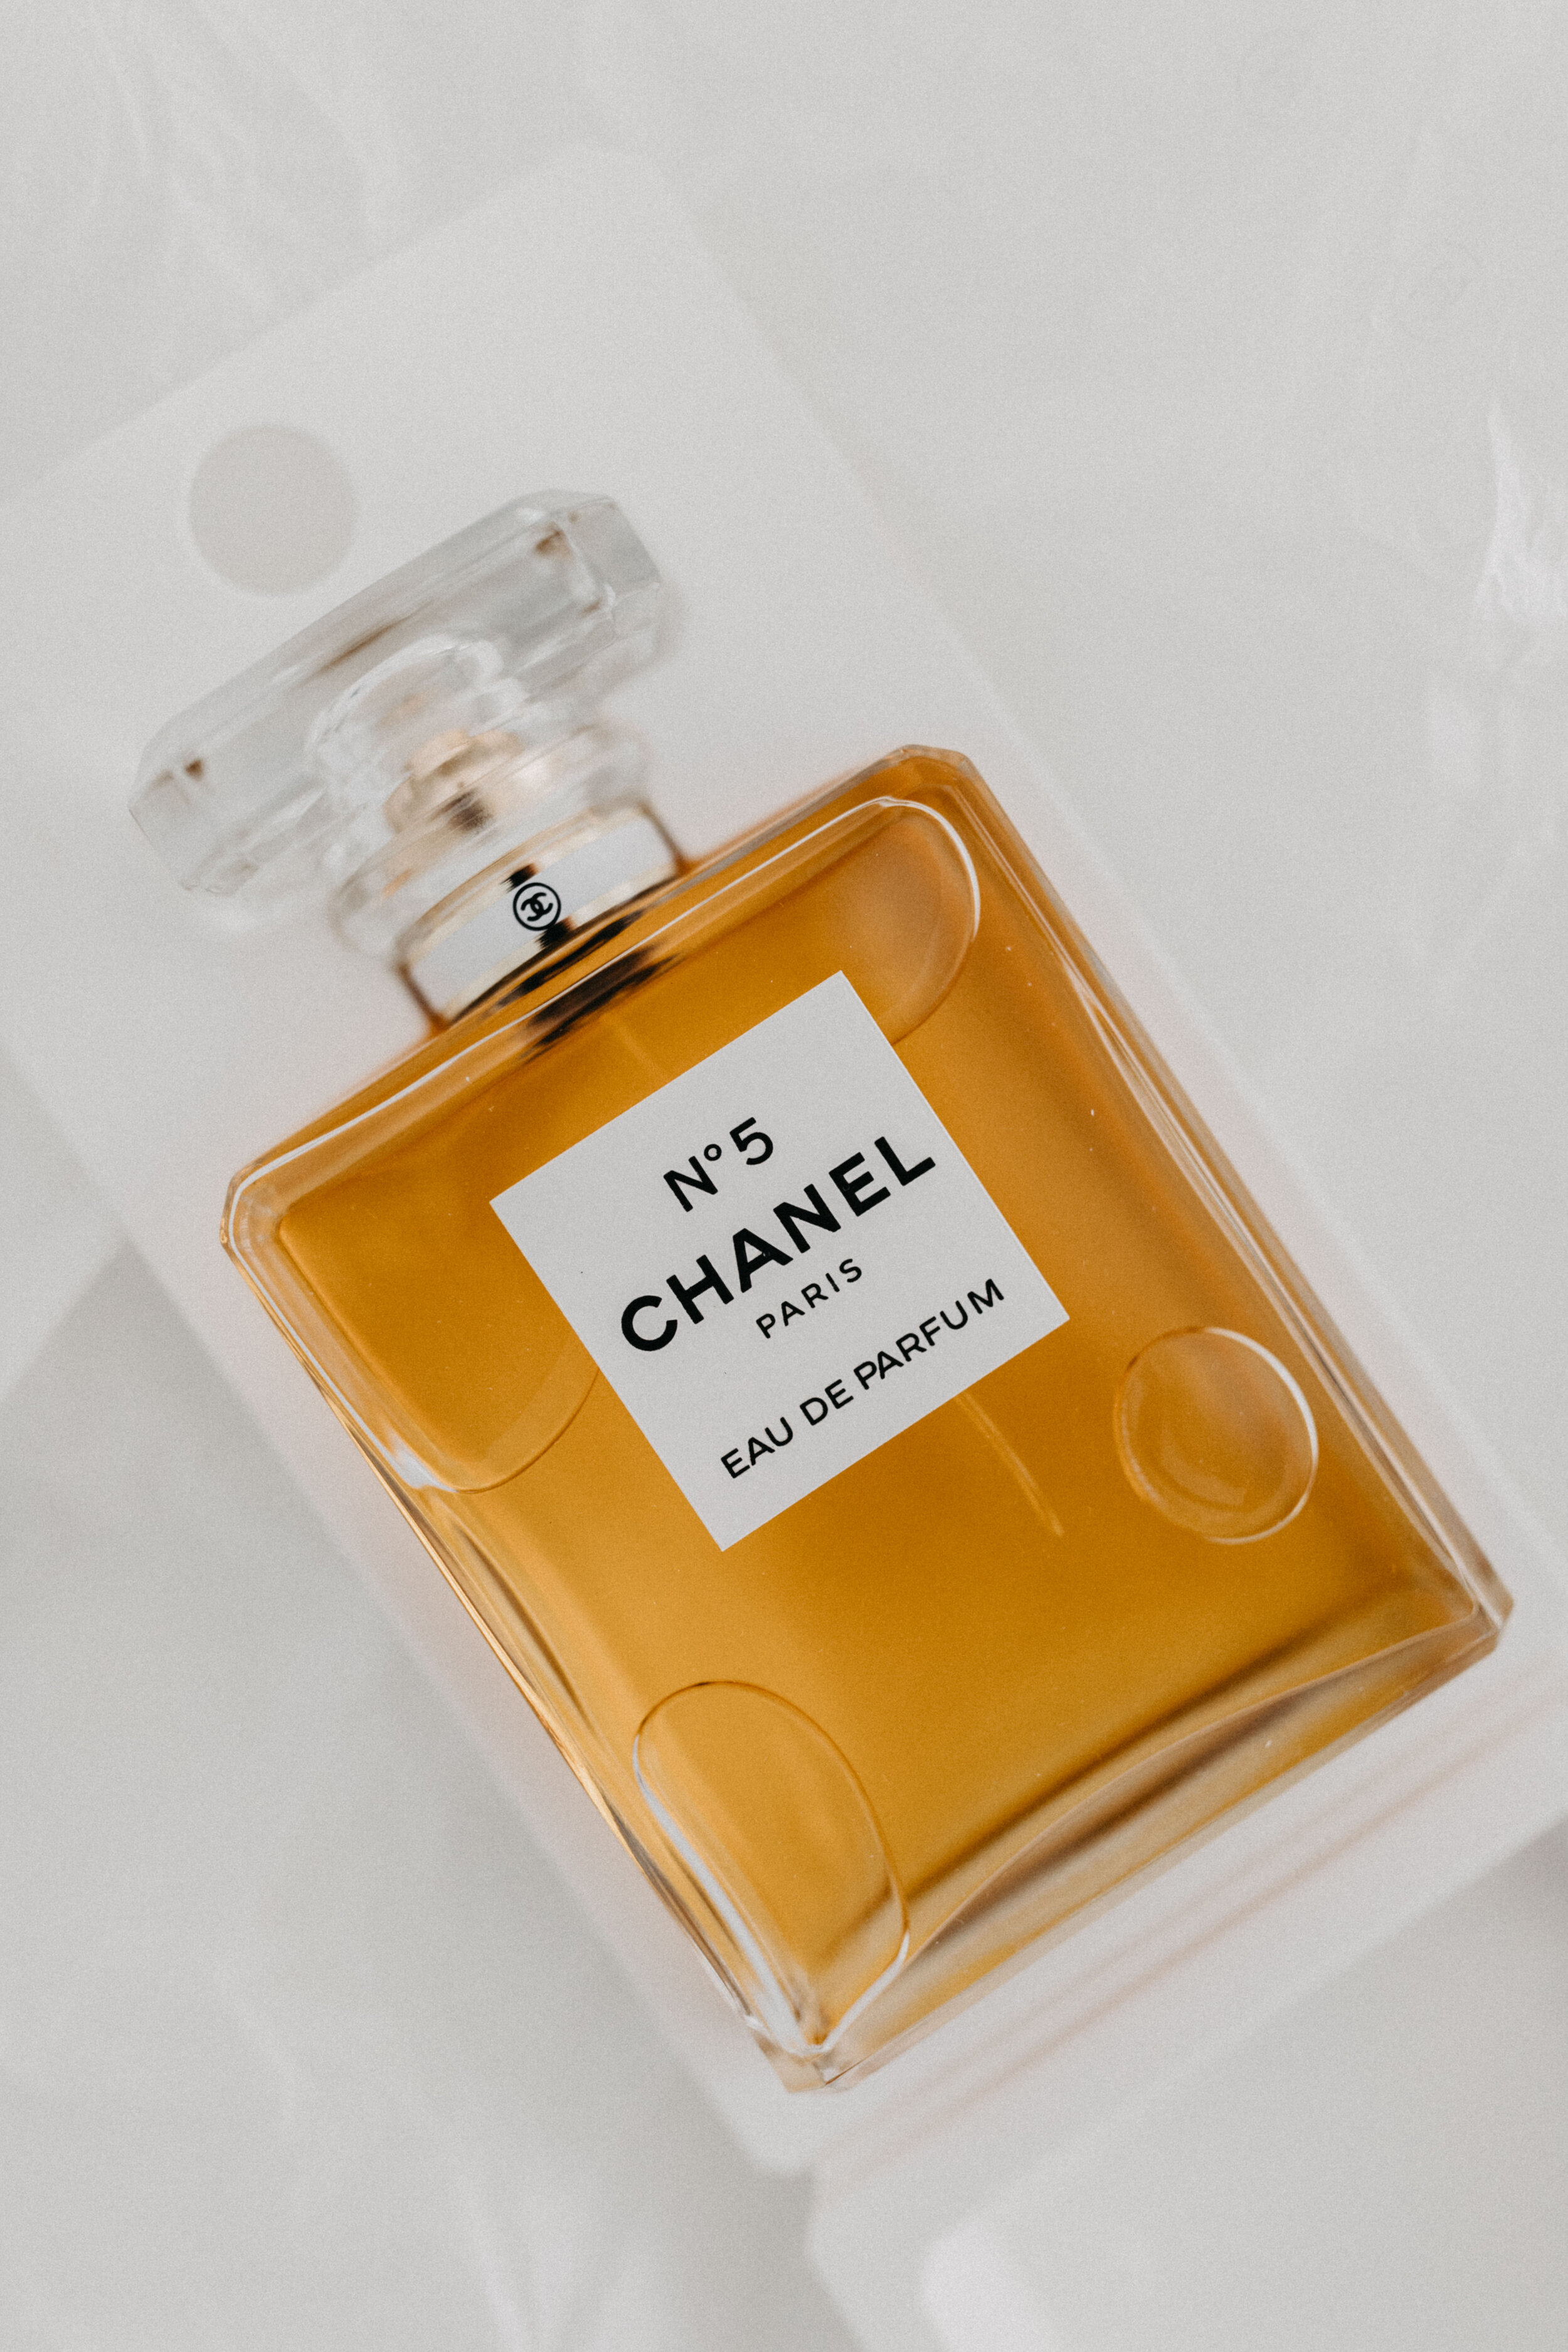 Chanel Factory 5 — MUSINGS OF LI CHI PAN